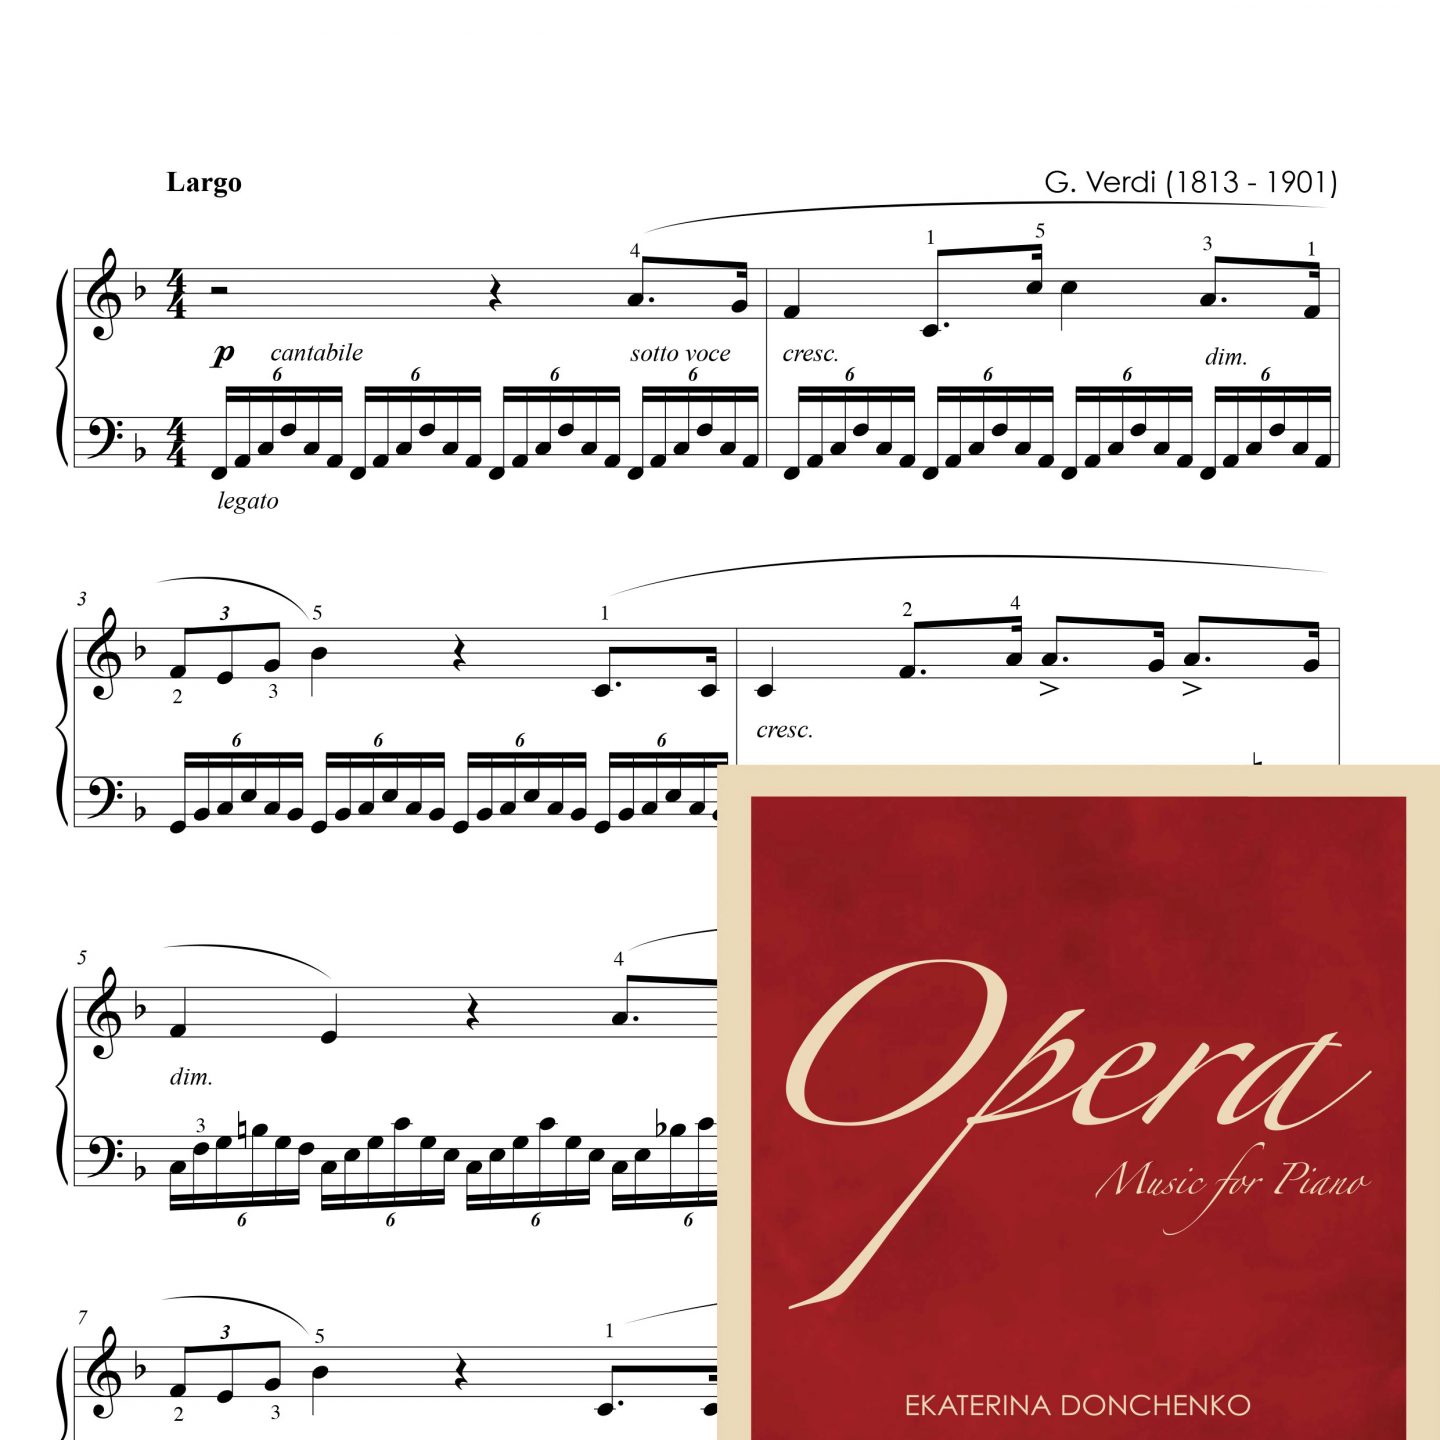 Verdi G. – VA, PENSIERO – Nabucco (for piano)